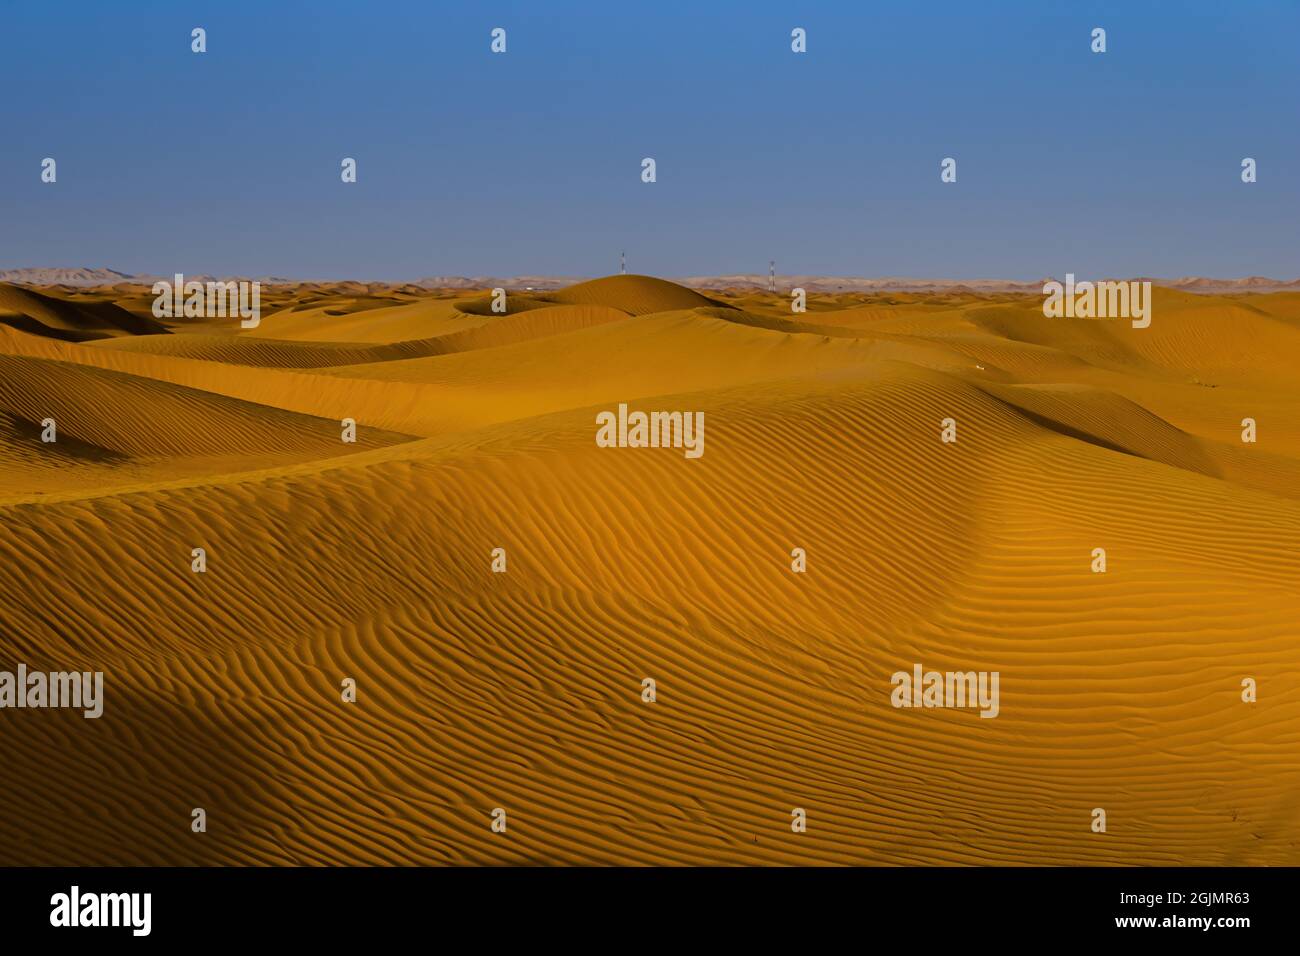 Sand dunes at sunset, Saudi Arabia Stock Photo